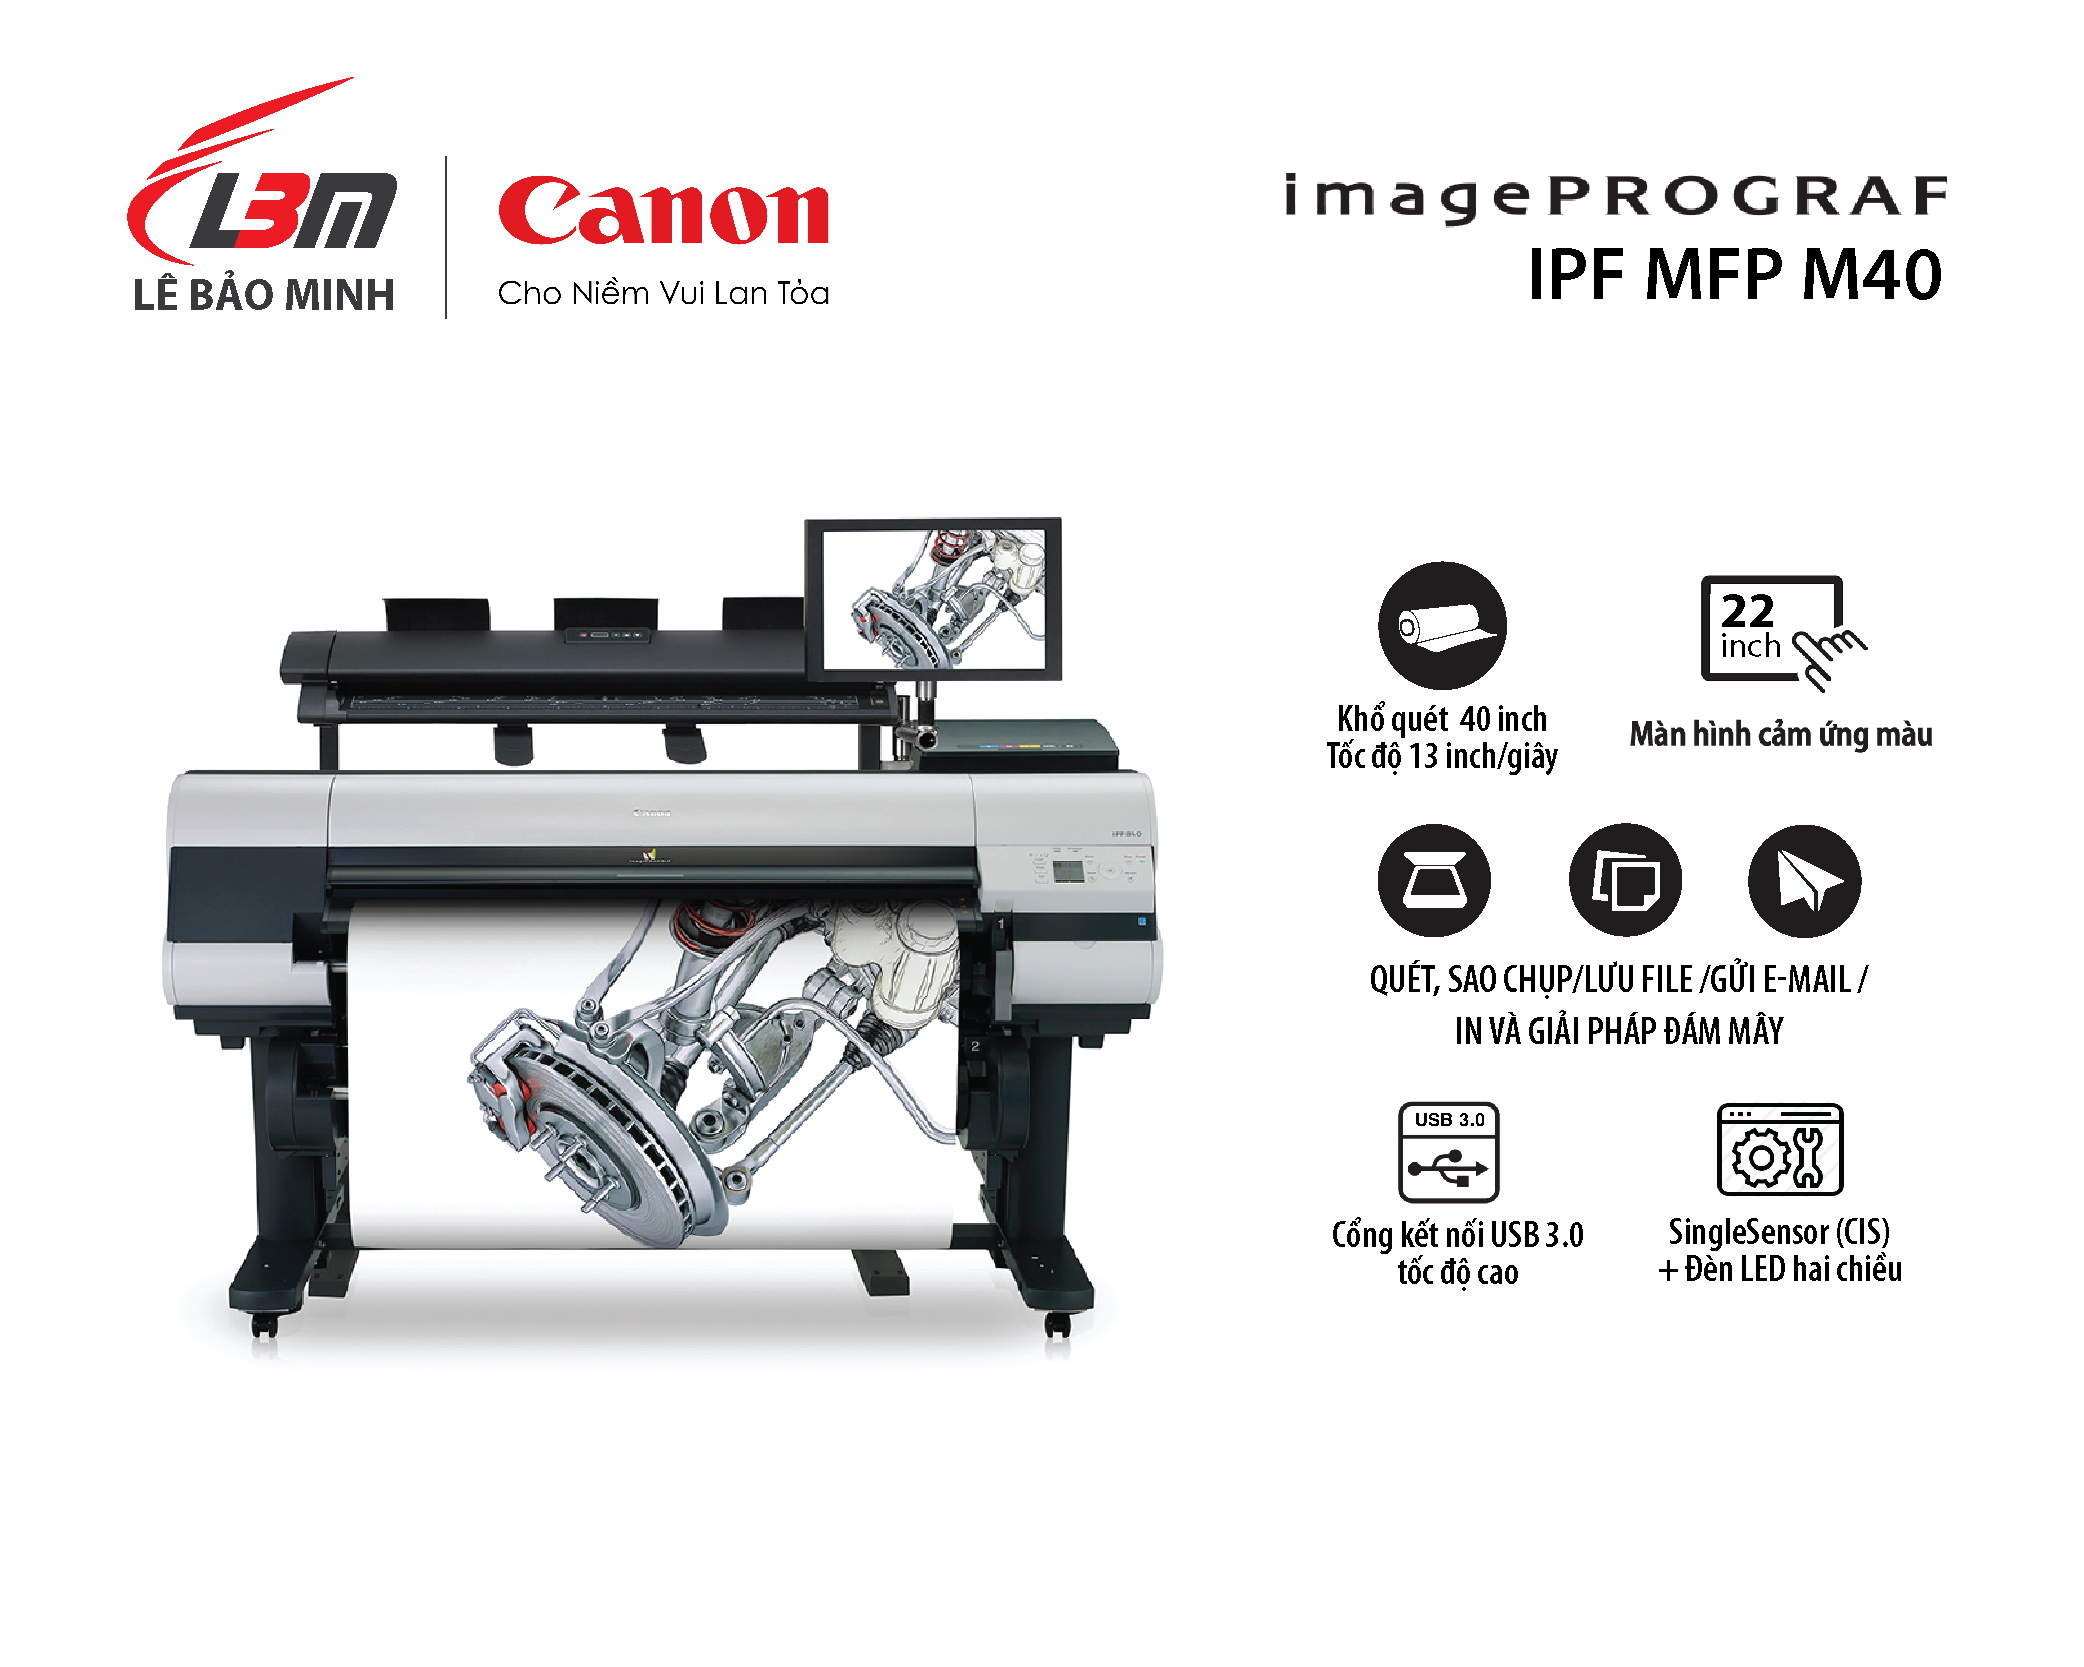 imagePROGRAF iPF MFP M40